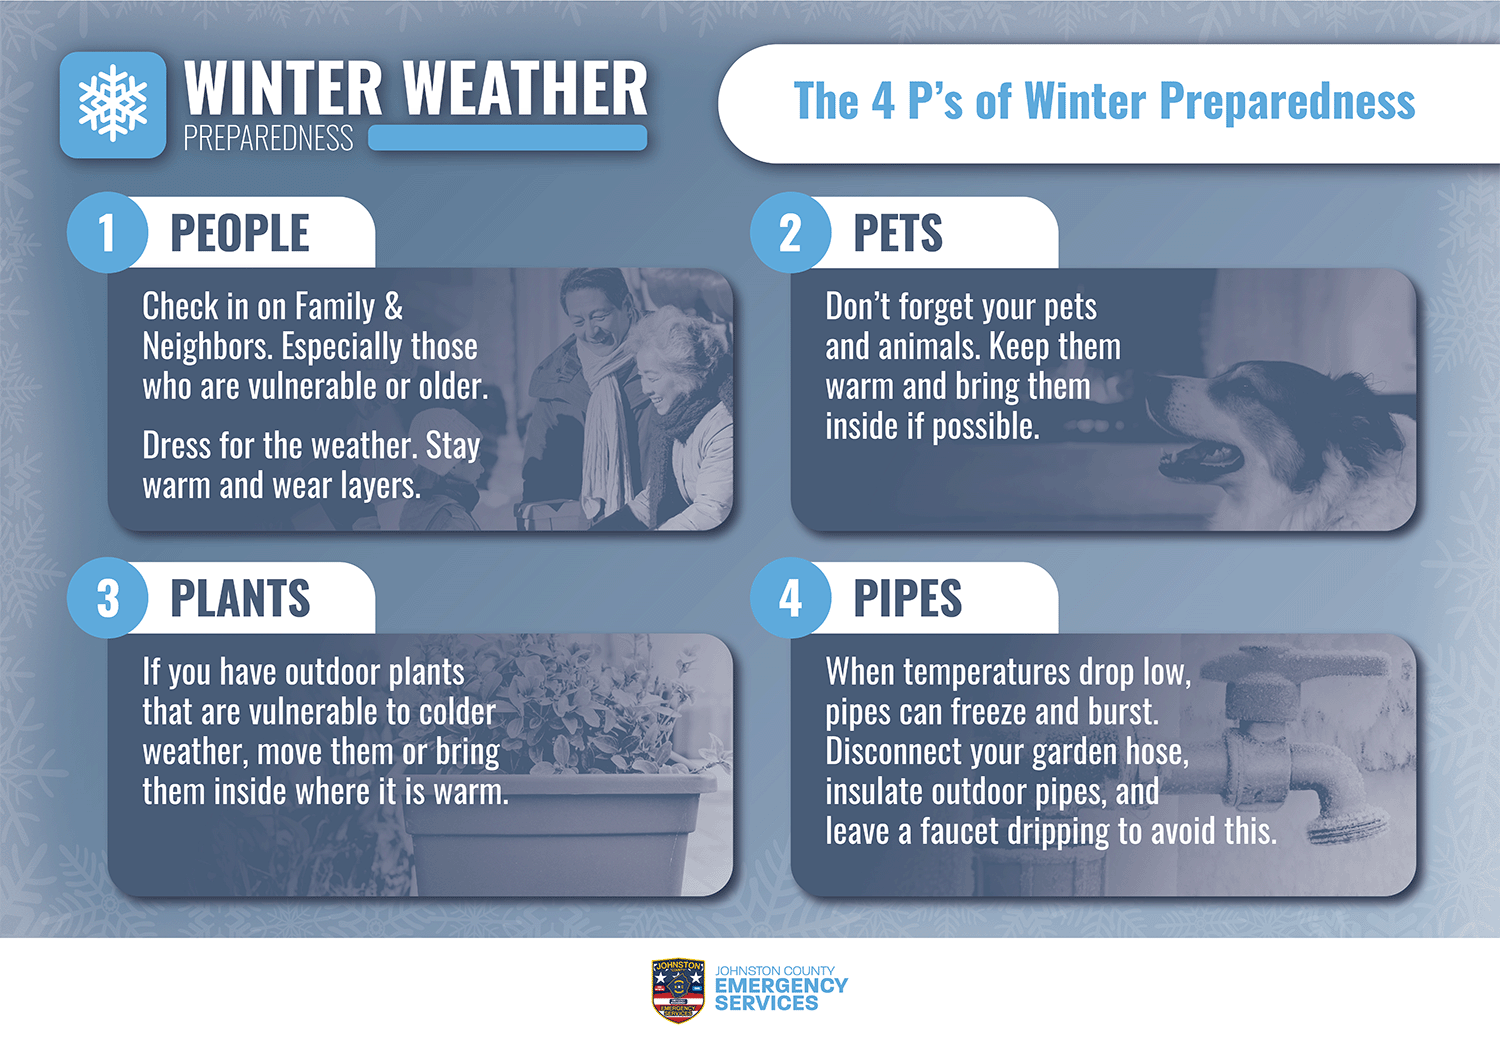 The 4 P's of Winter Preparedness Infographic